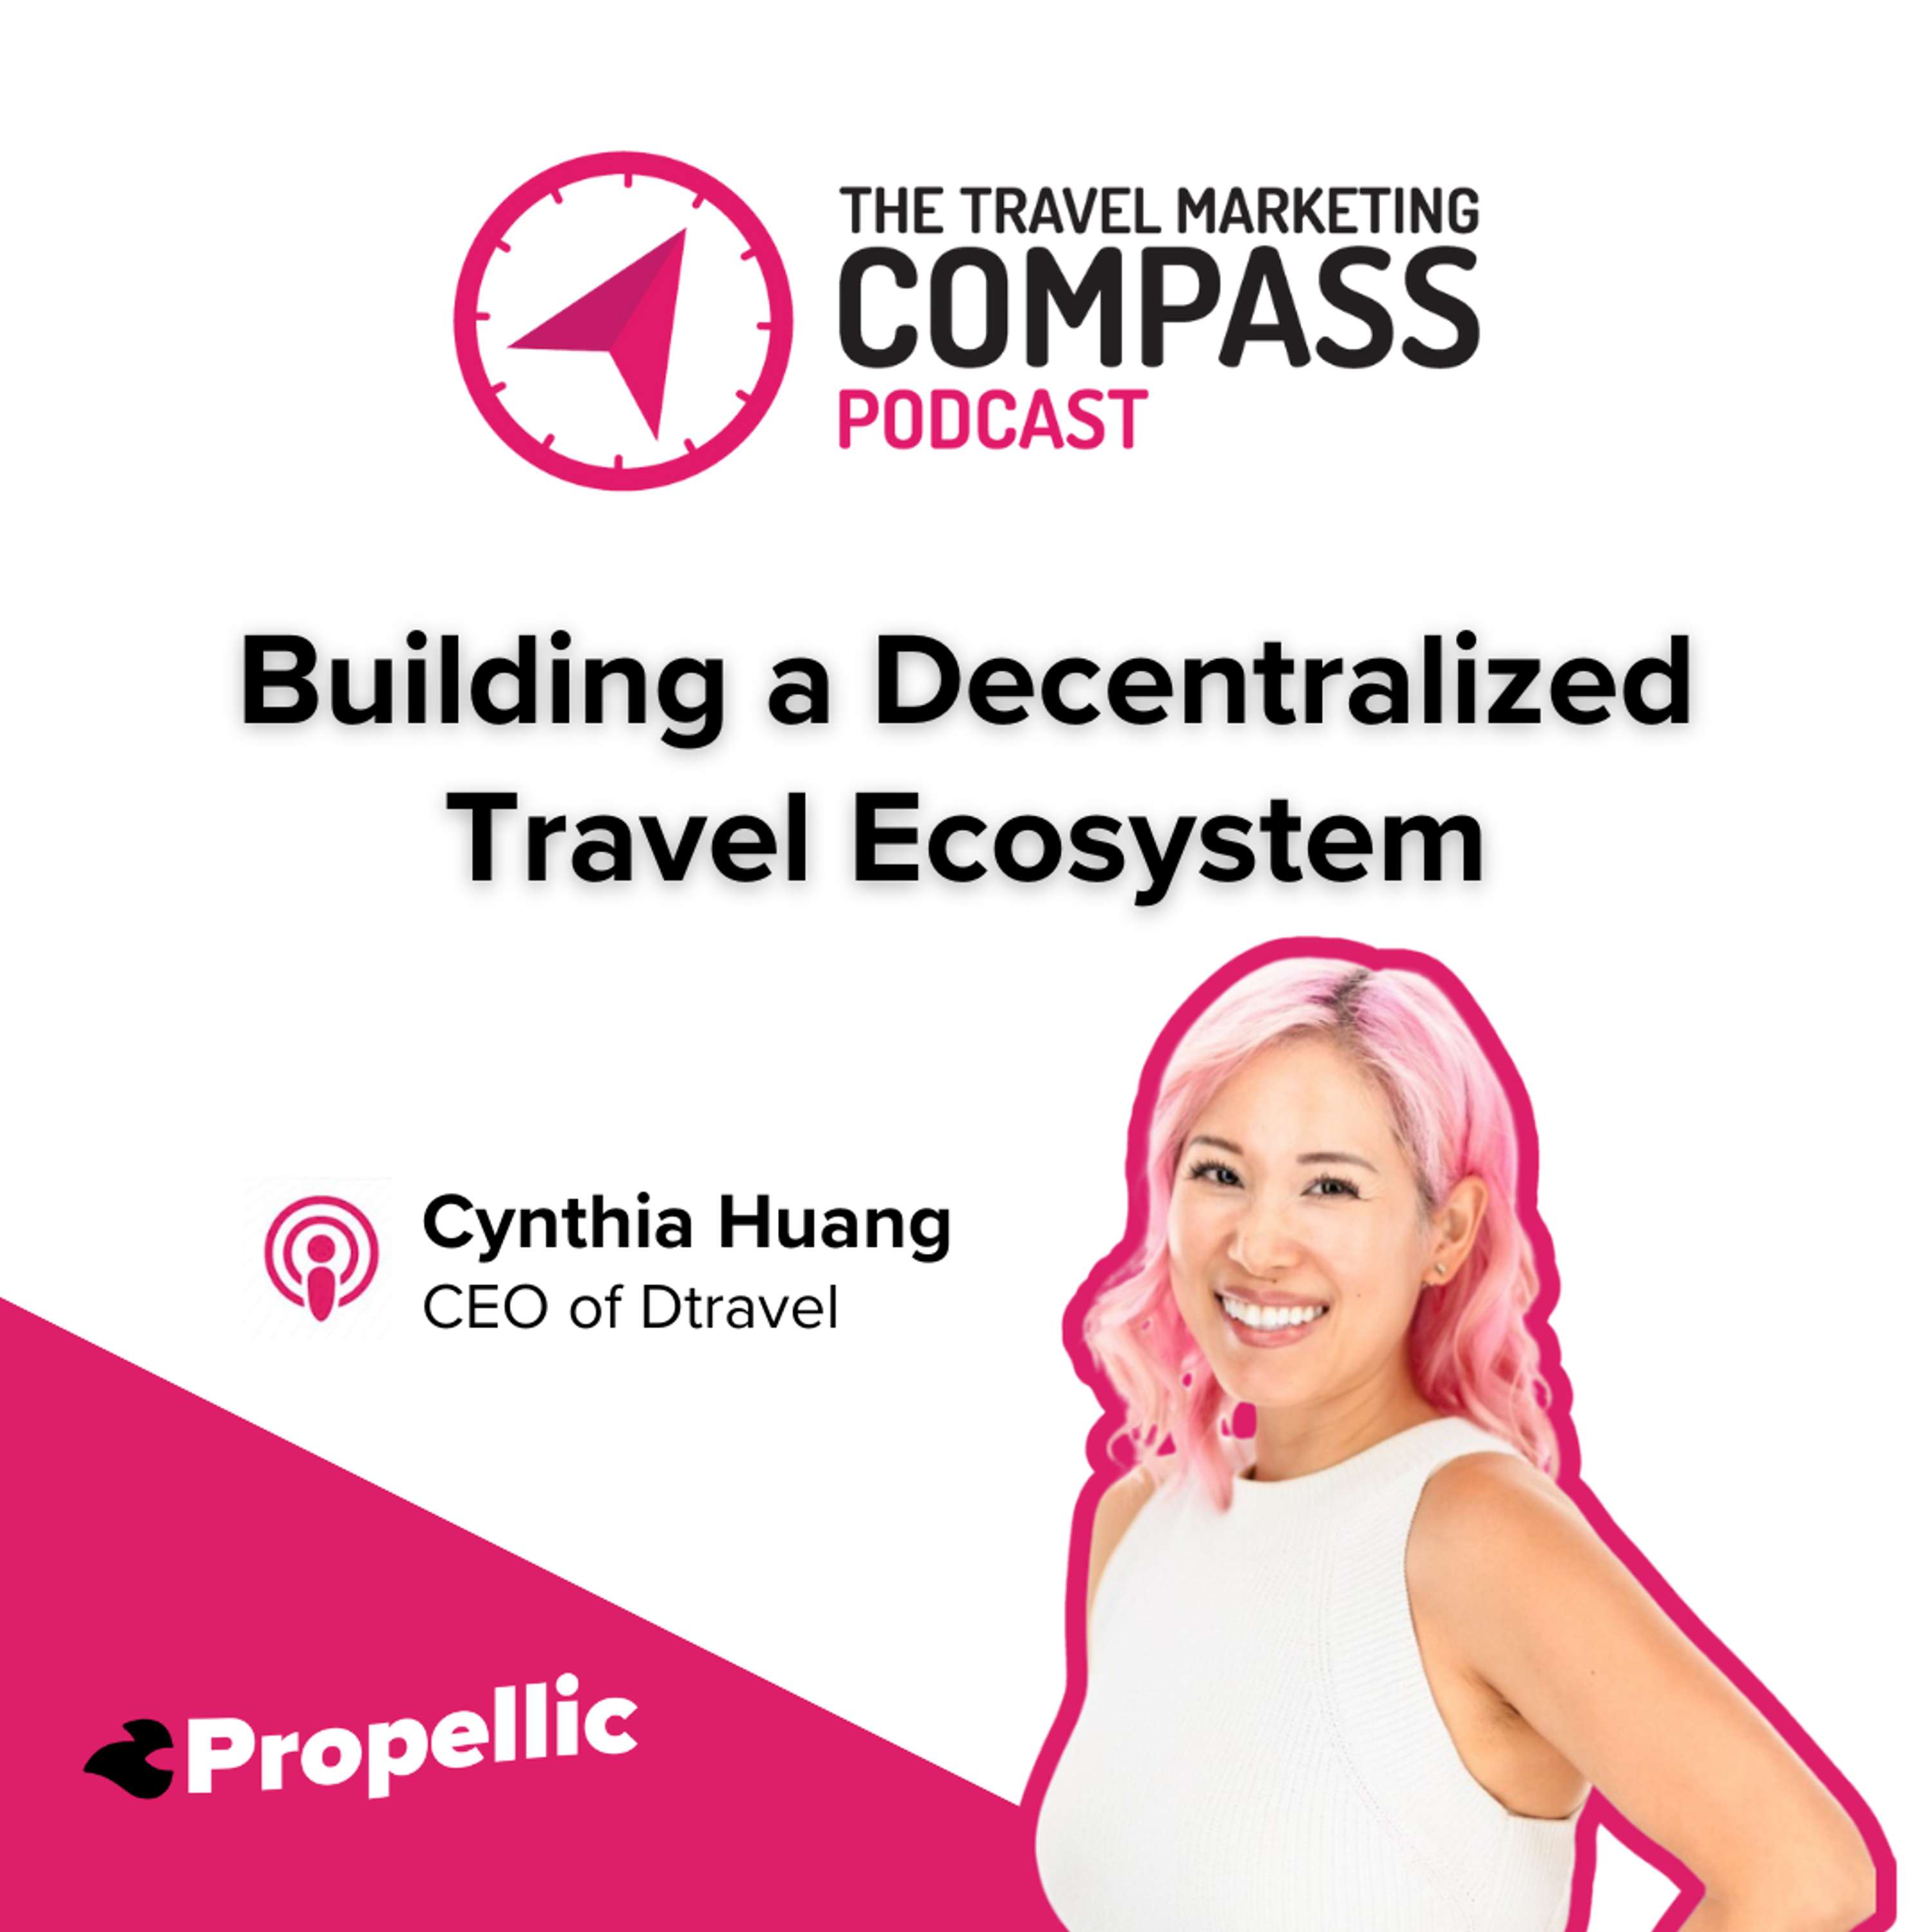 Building a decentralized travel ecosystem